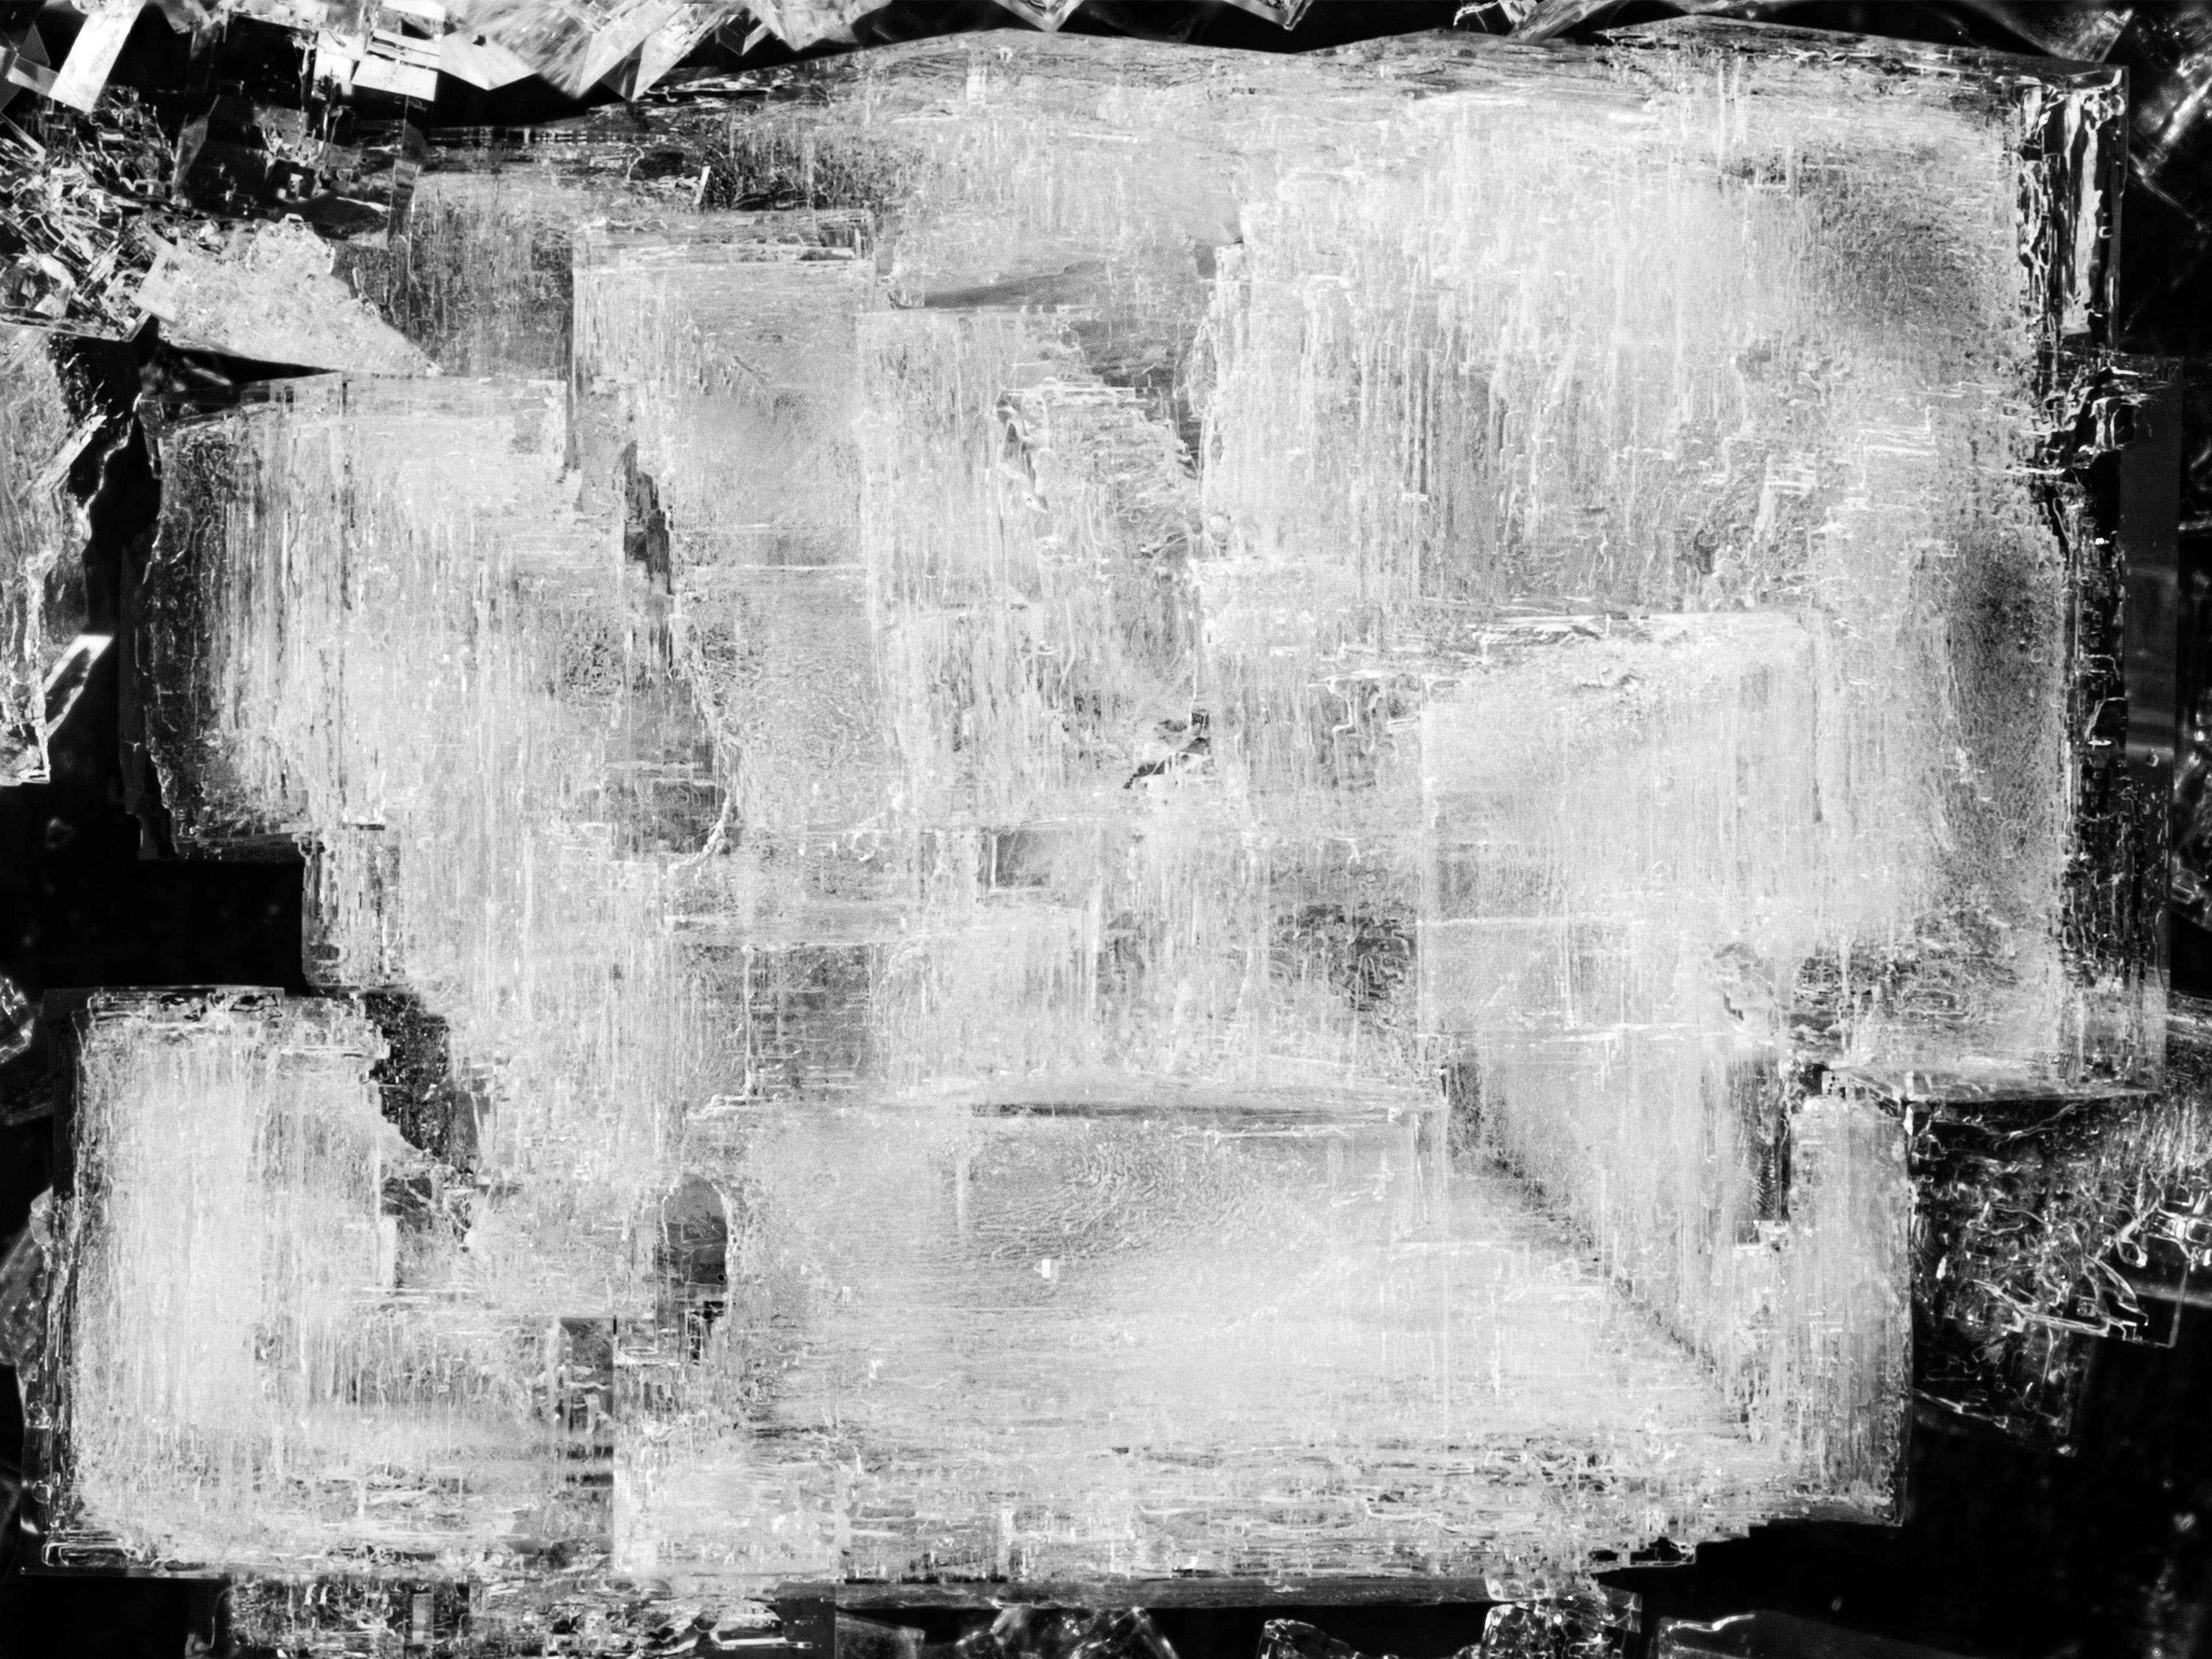 Christine Lorenz Abstract Photograph - Salt 0977 (Fractured 3)